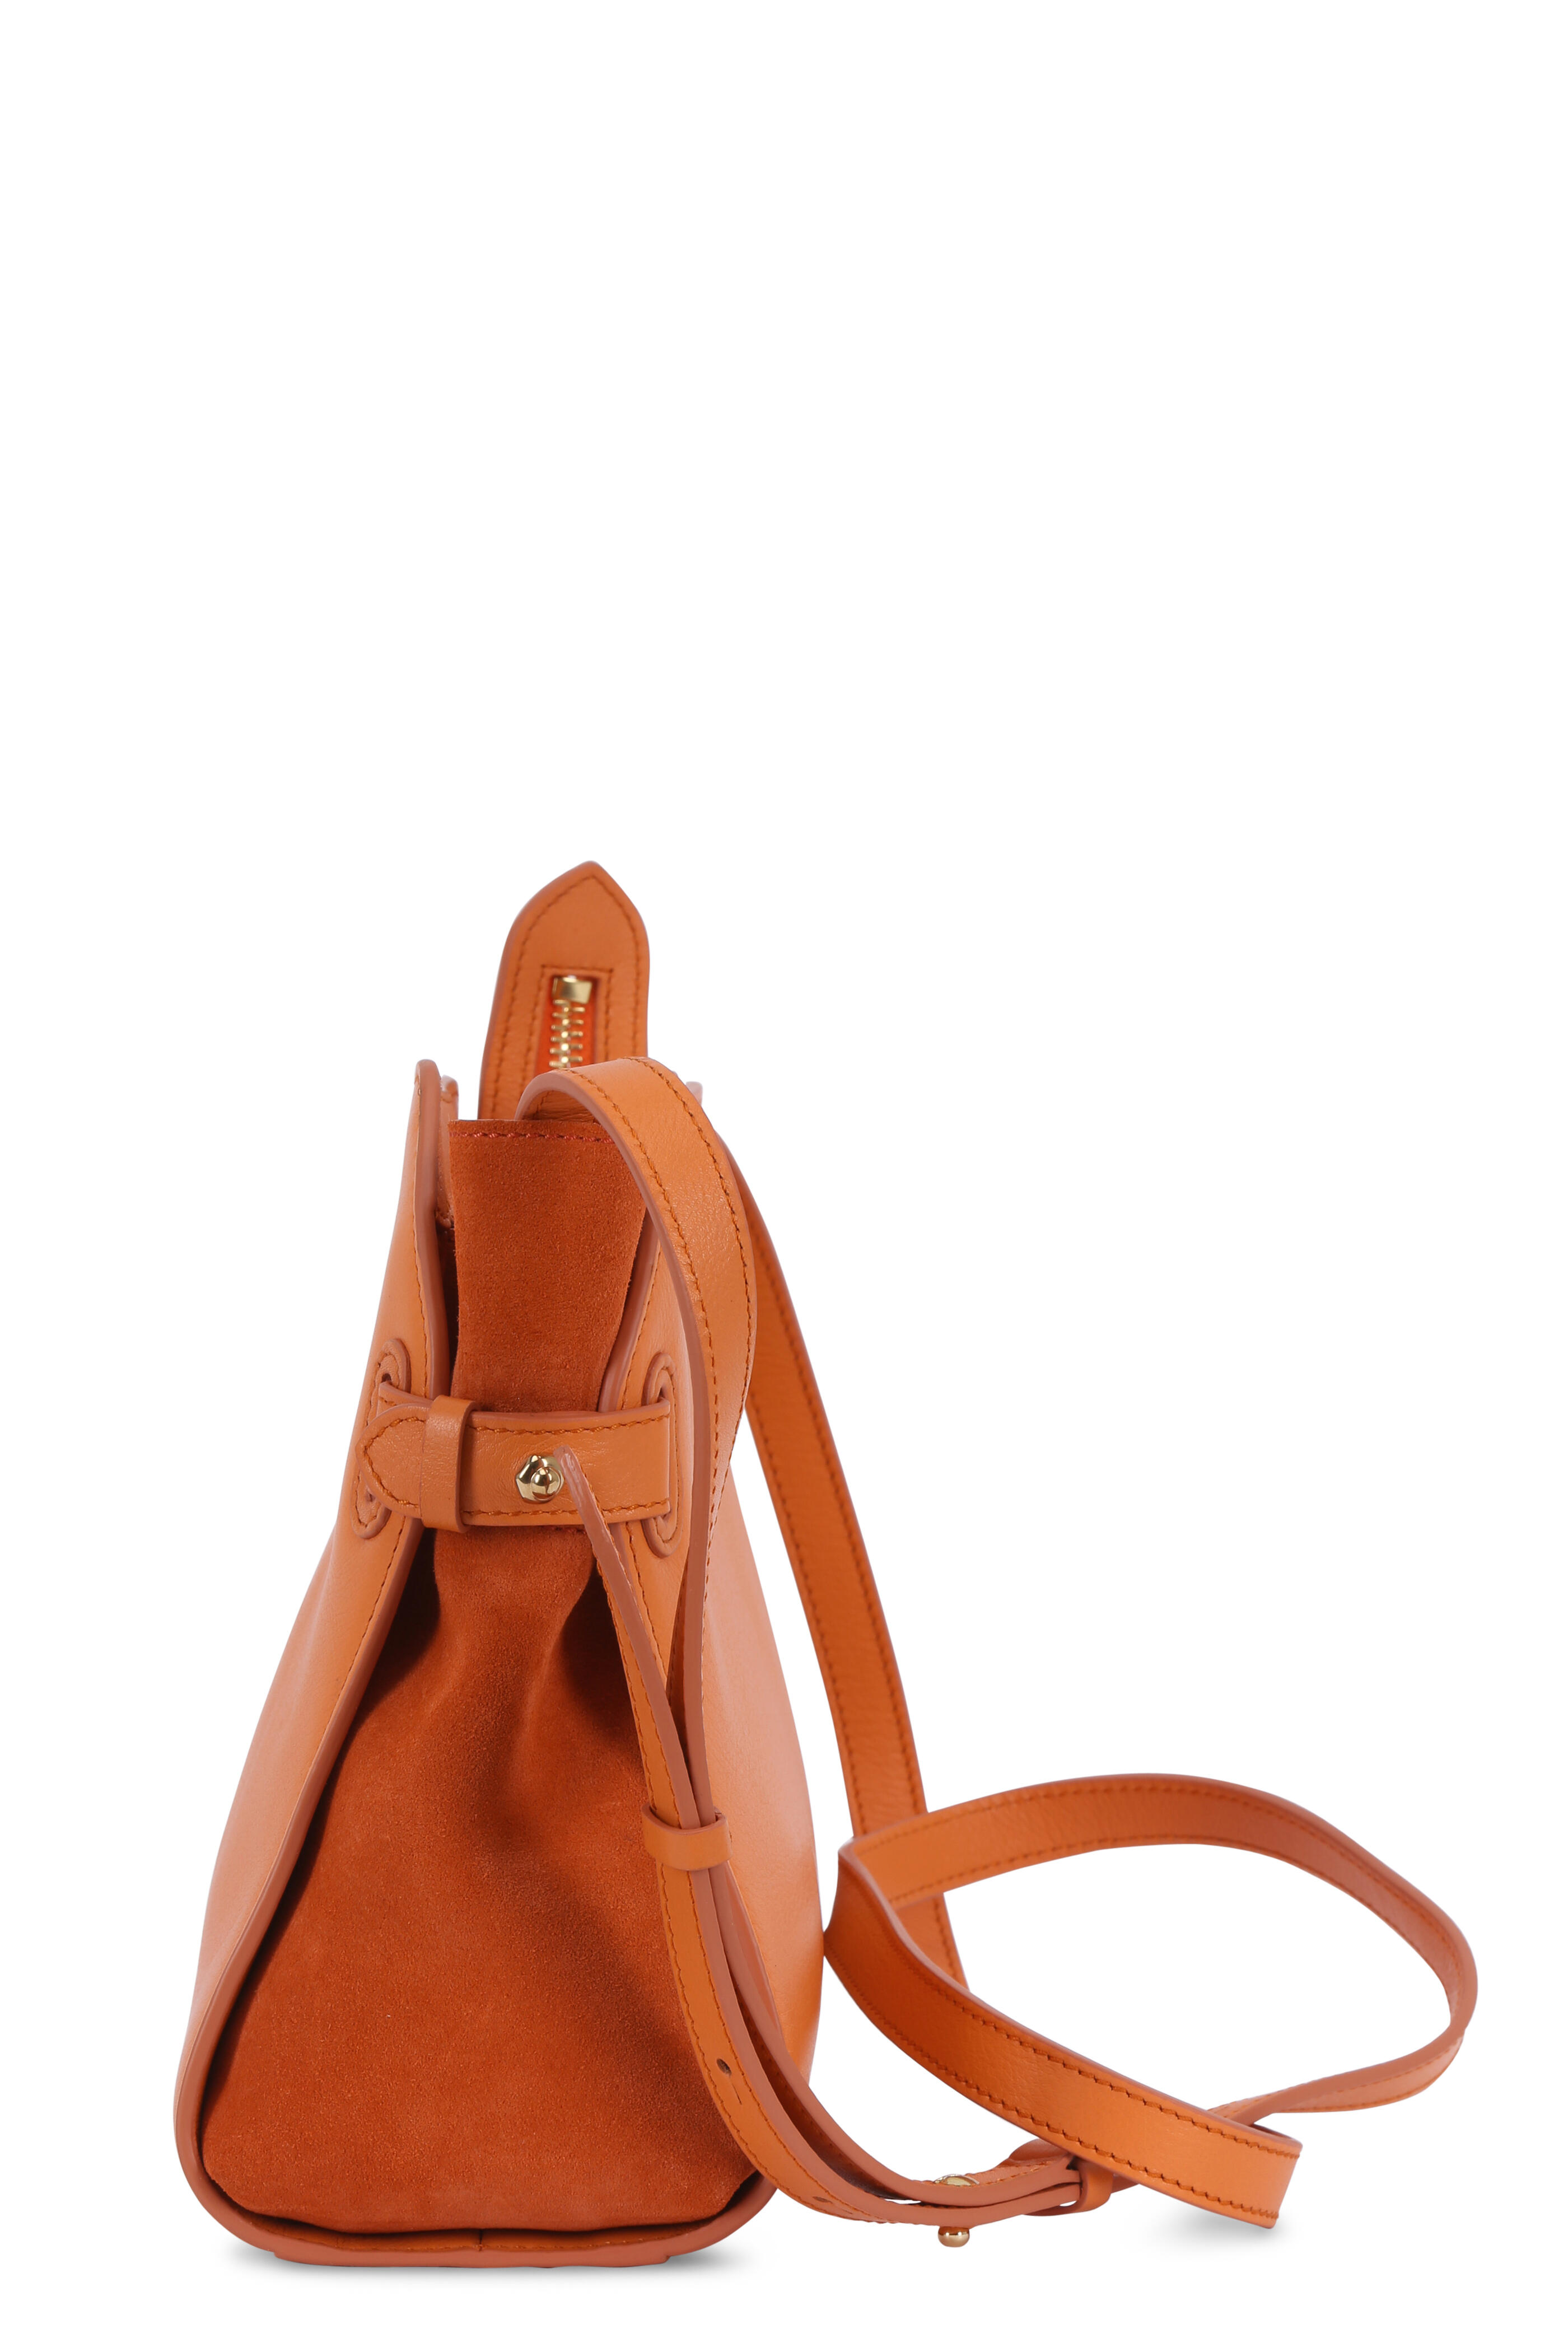 Nina Ricci - Marché Orange Leather & Suede Mini Shoulder Bag